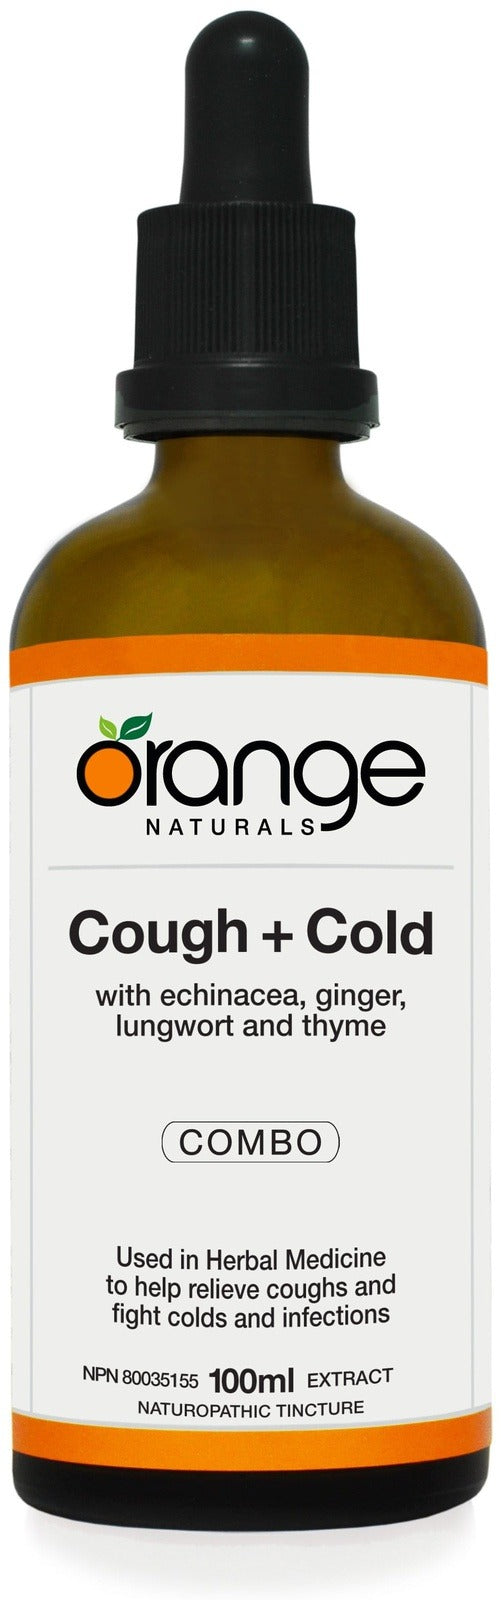 Orange Naturals Cough+Cold Combo Tincture 100 mL Image 2